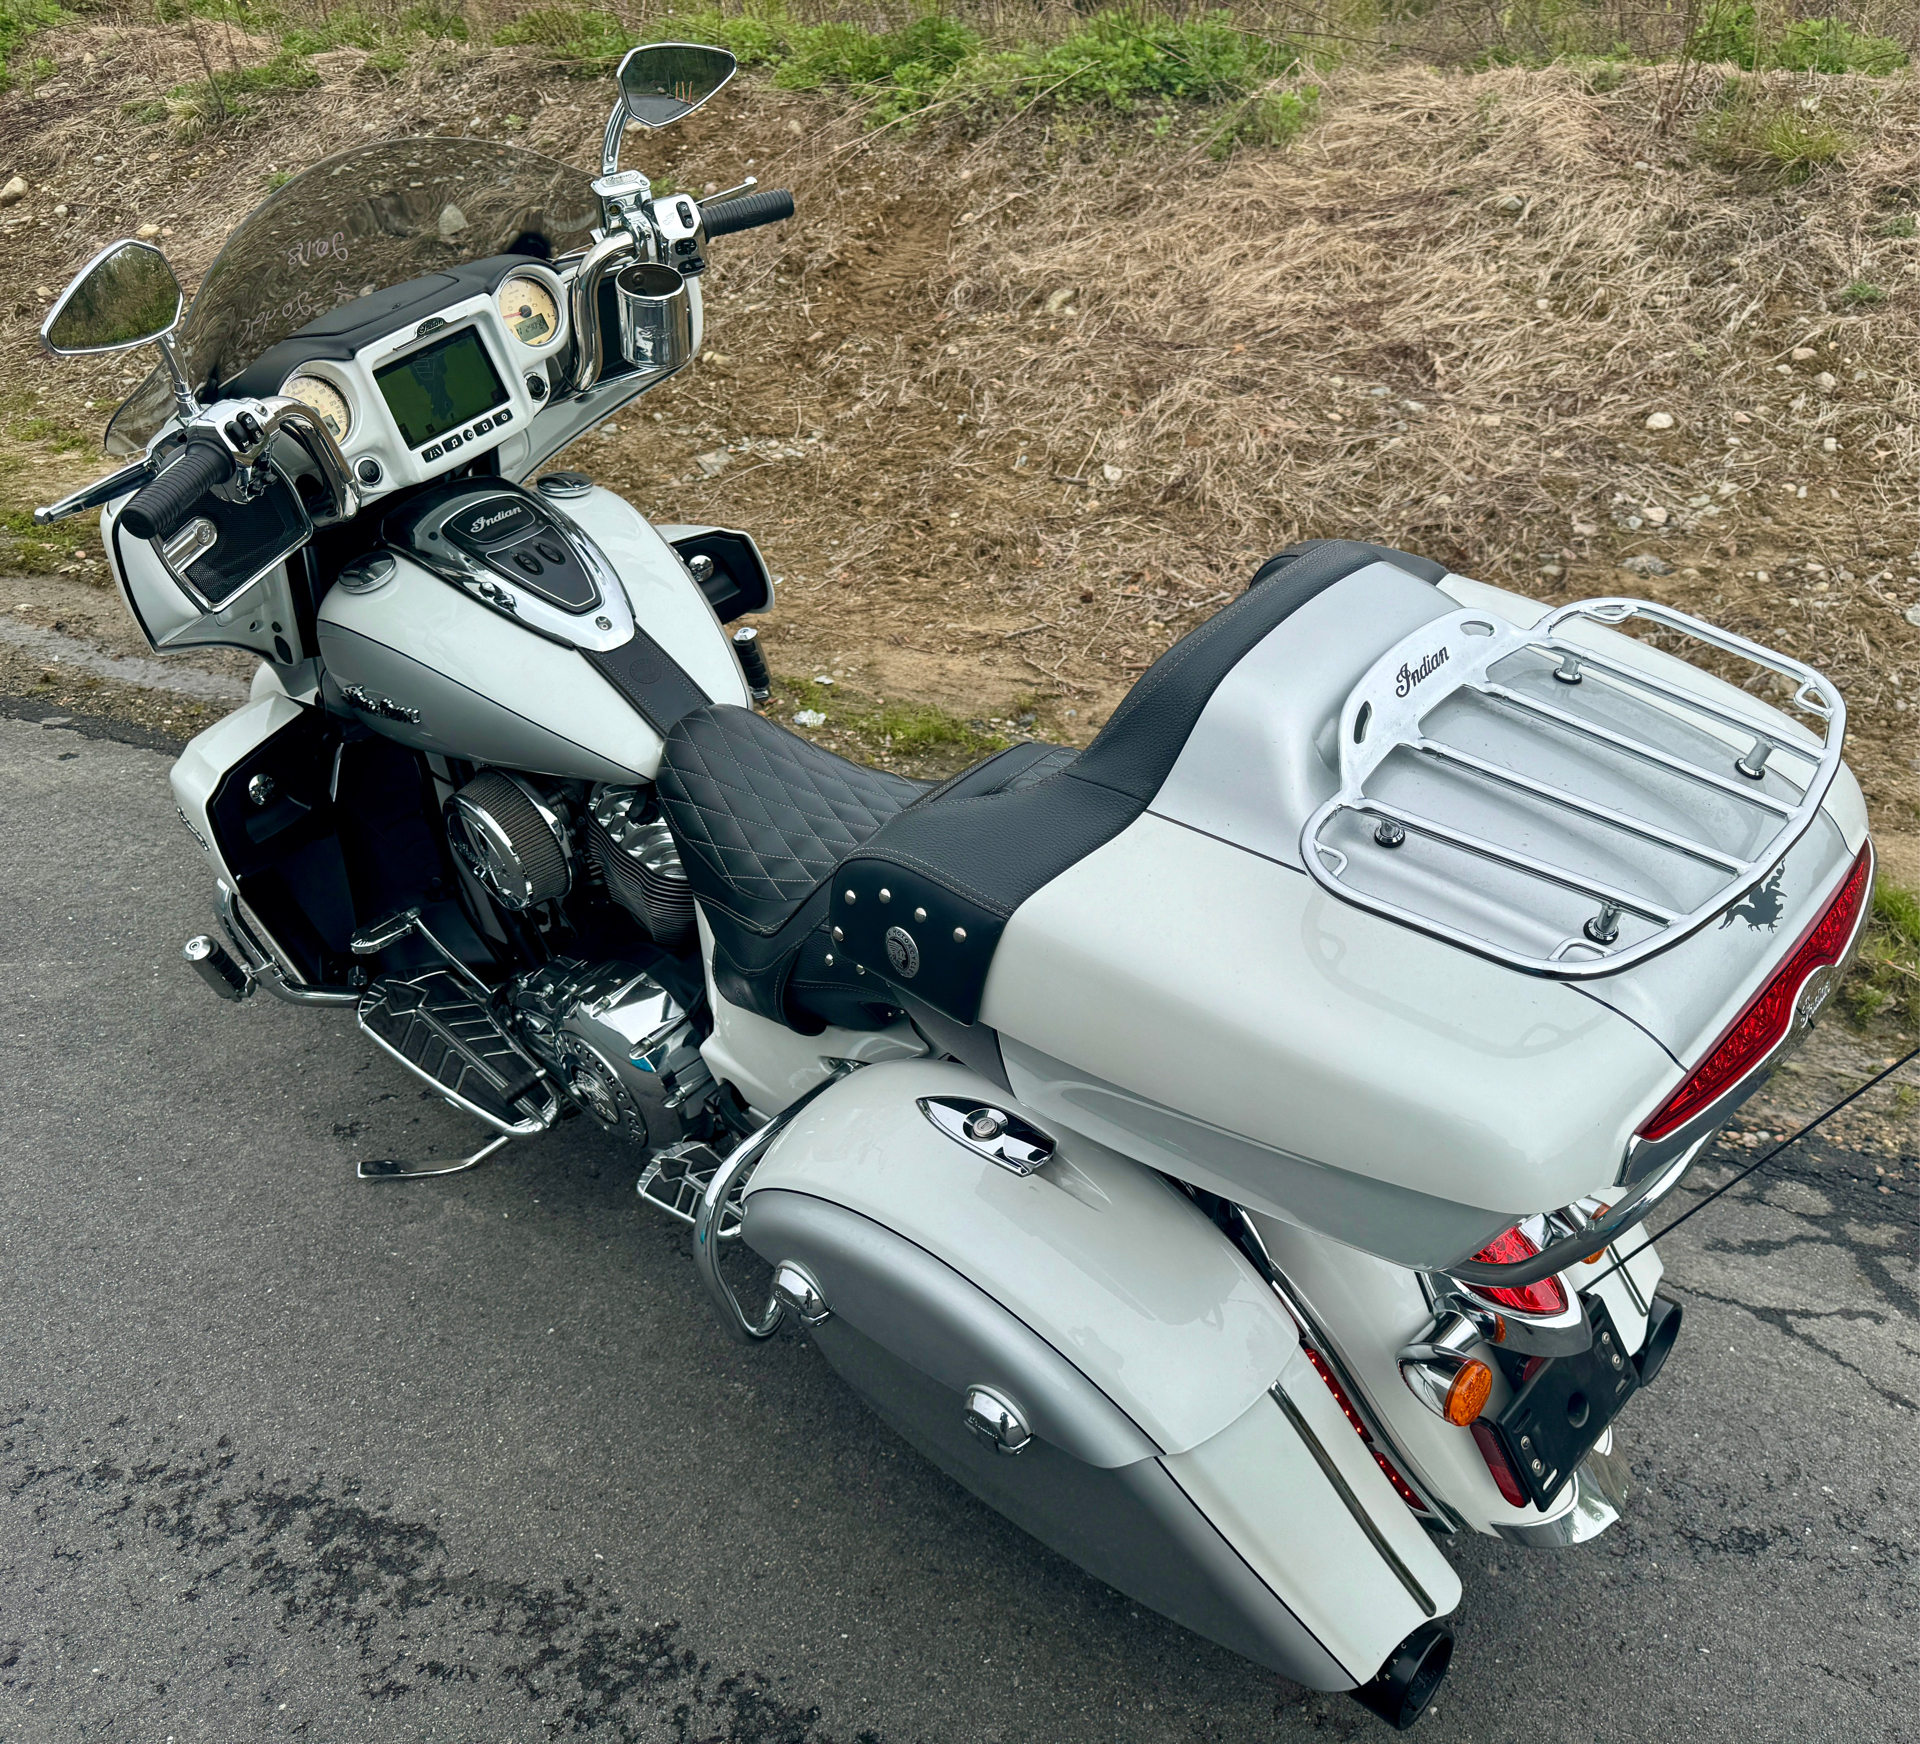 2018 Indian Motorcycle Roadmaster® ABS in Foxboro, Massachusetts - Photo 13